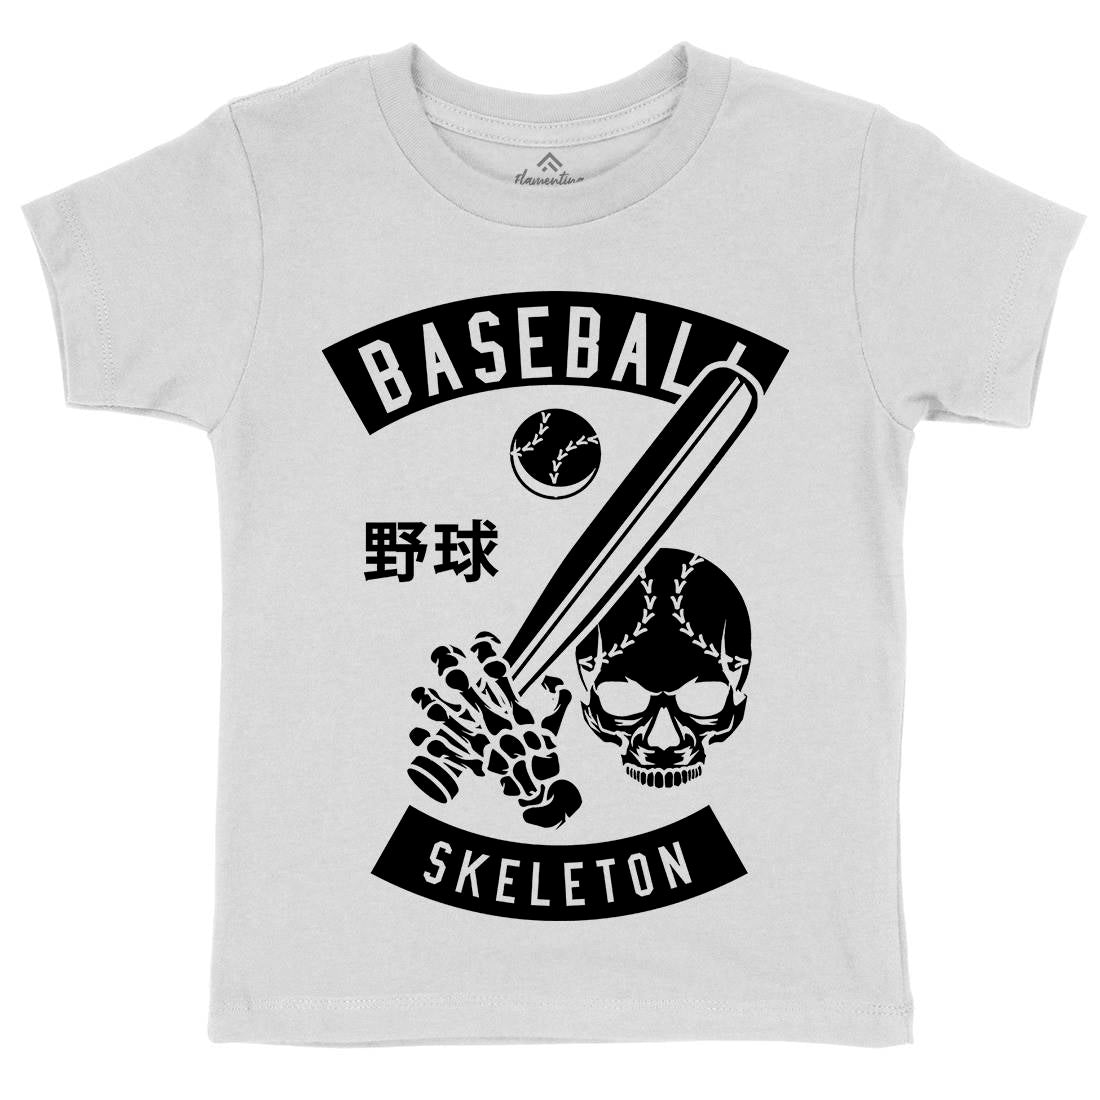 Baseball Skeleton Kids Organic Crew Neck T-Shirt Sport B489